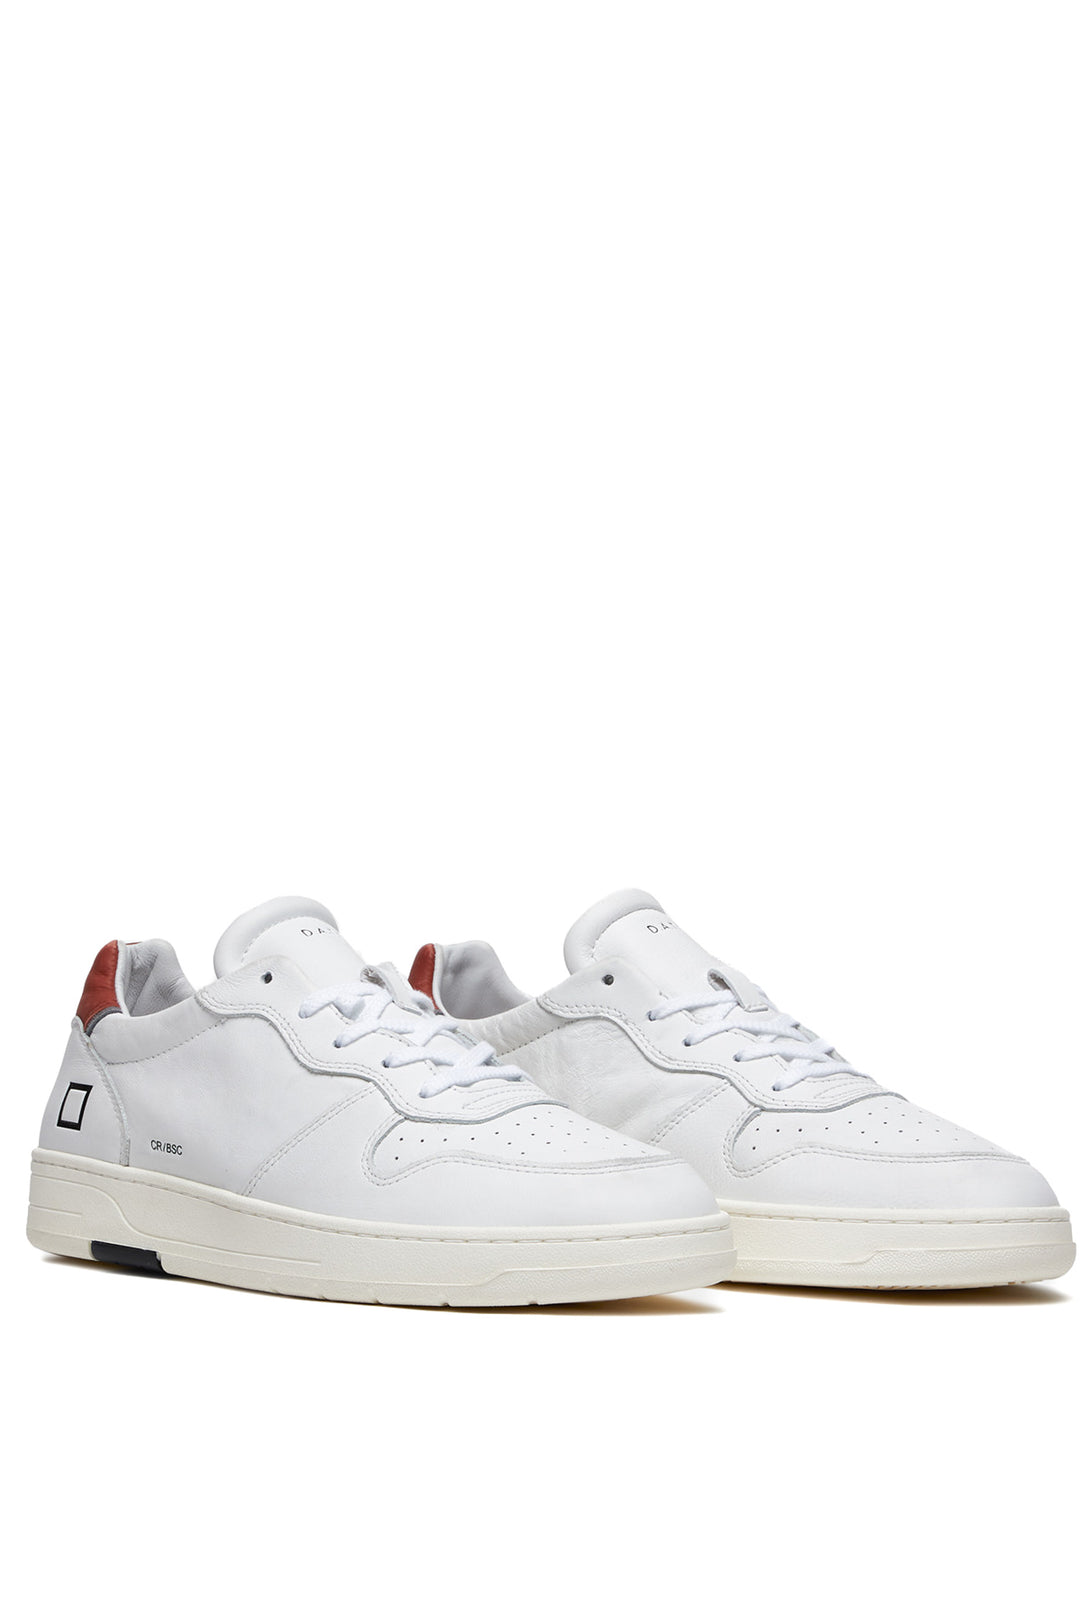 DATE Sneaker Court Basic White-Brick - Mancinelli 1954